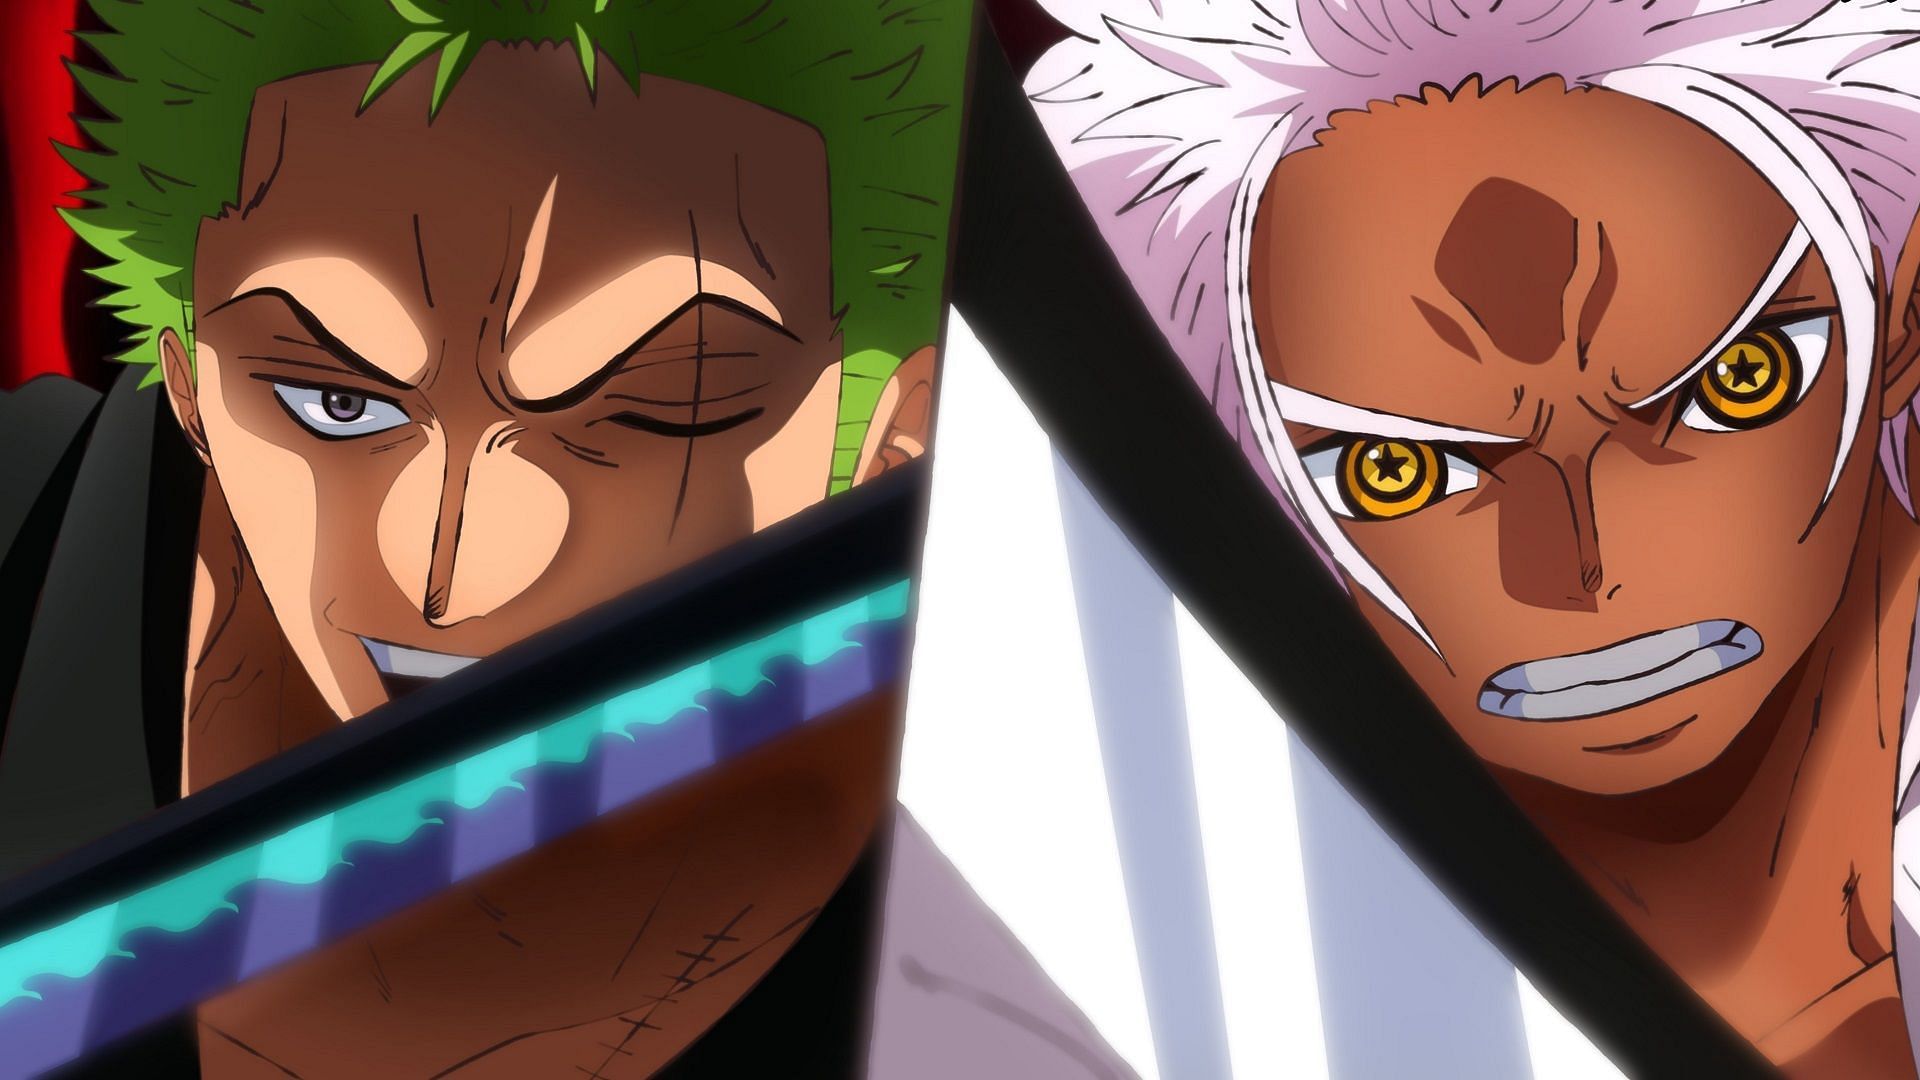 Zoro was smiling, while S-Hawk was shocked (Image via Eiichiro Oda/Shueisha, One Piece)